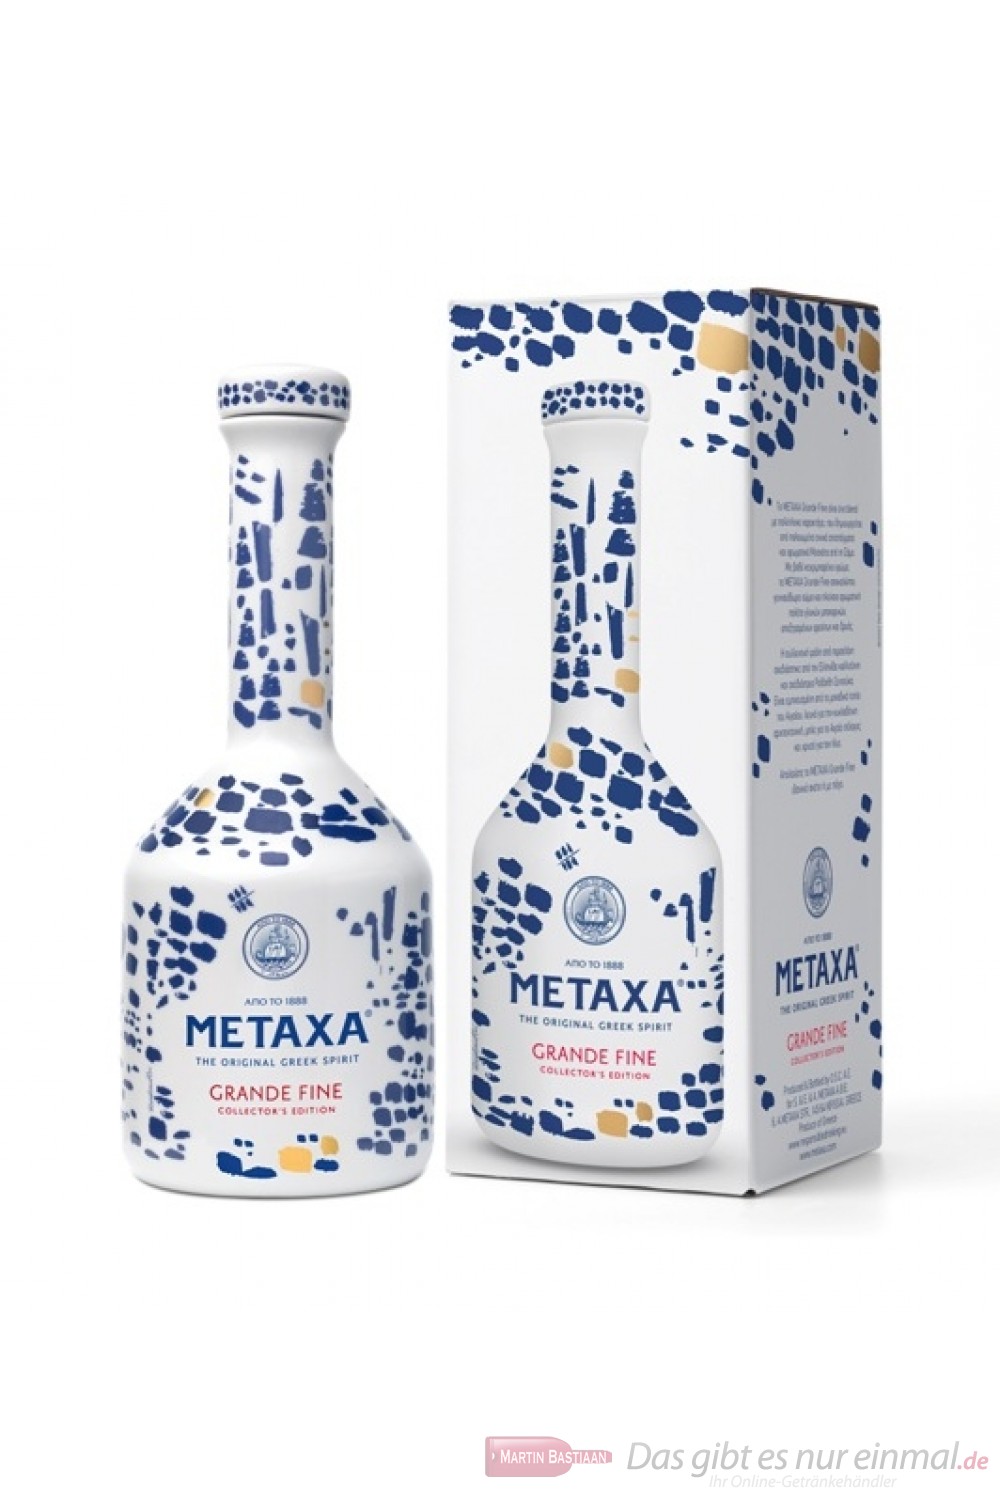 Metaxa Grande Fine Collector's Edition